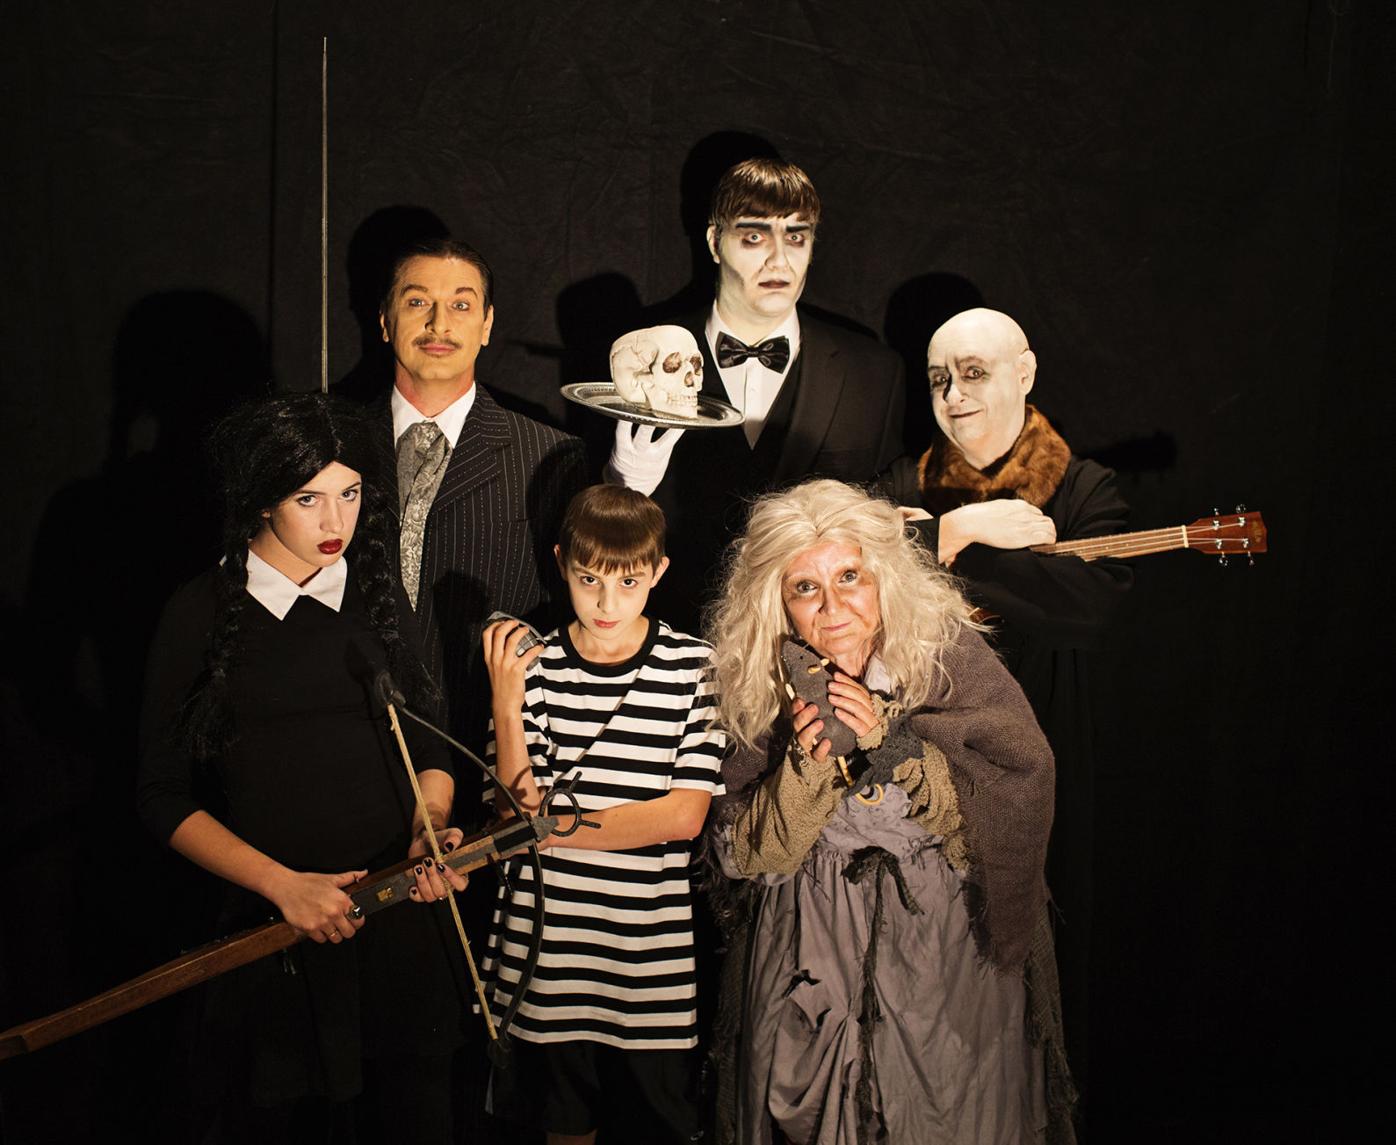 Wednesday Addams by euclase  Addams family, Movies, Adams family